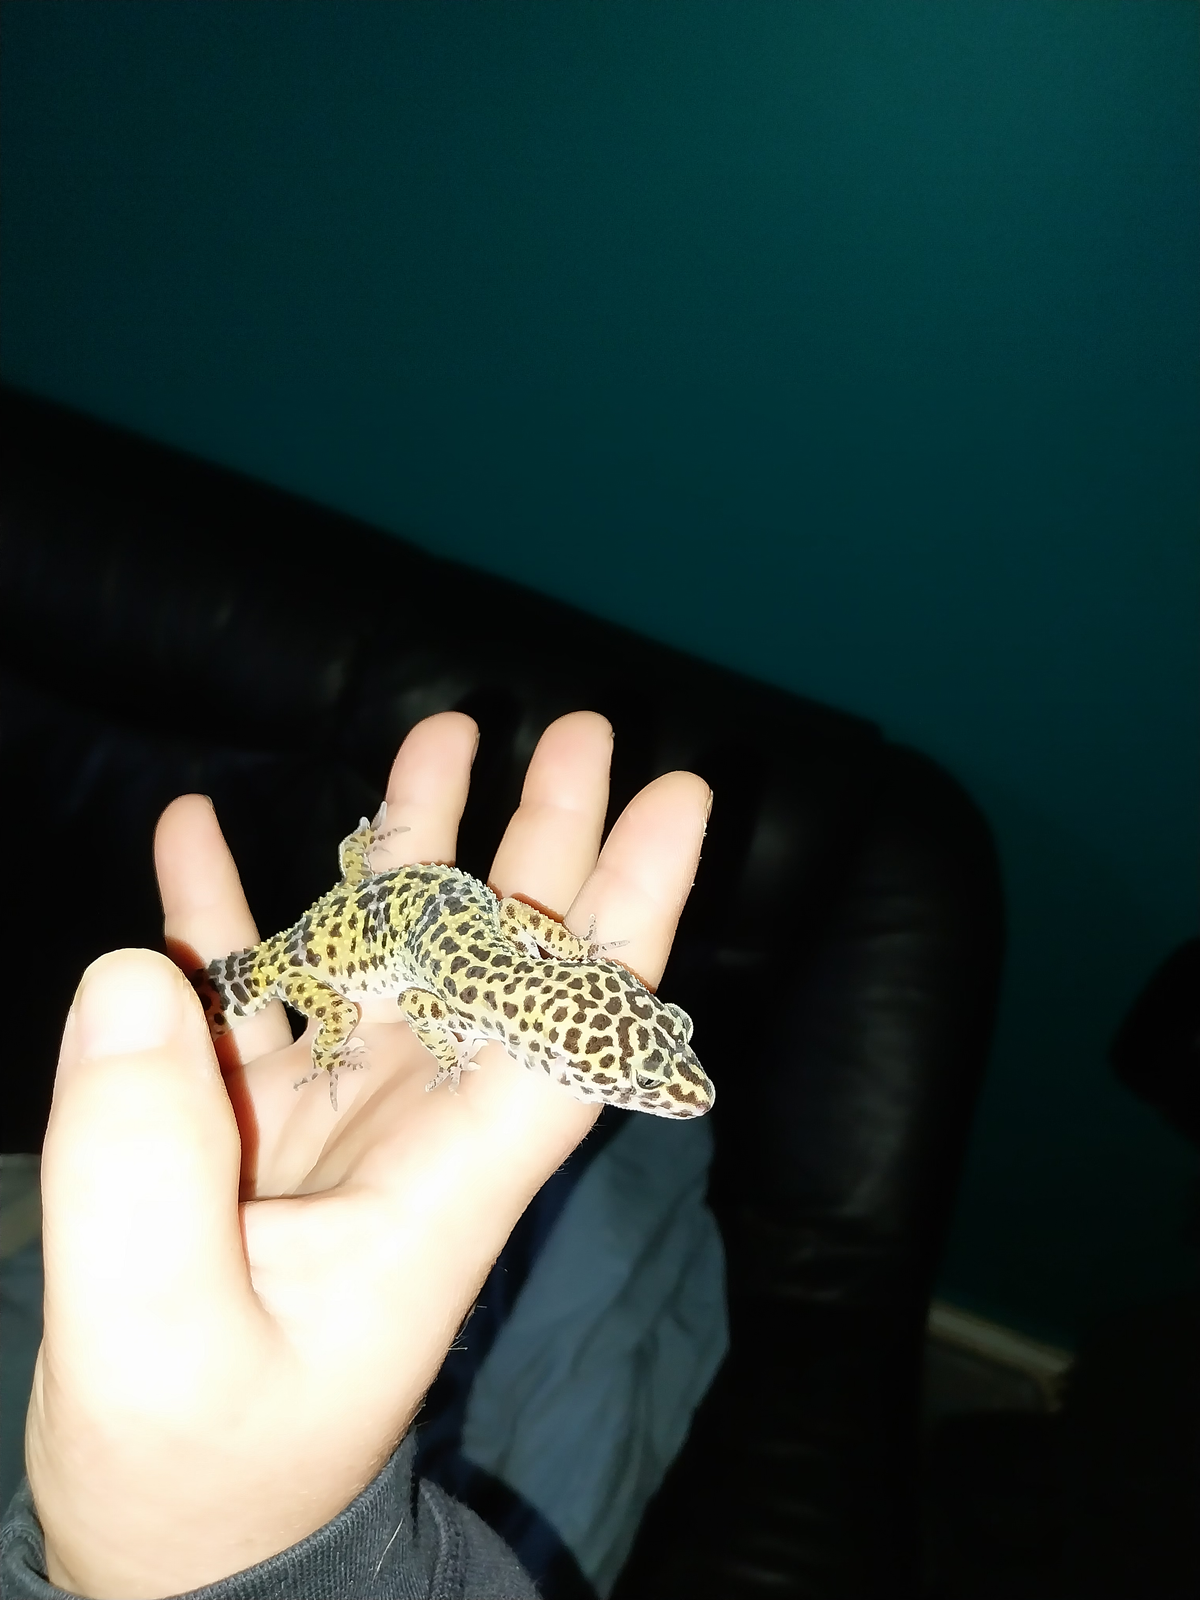 Gekko, Leopard gecko